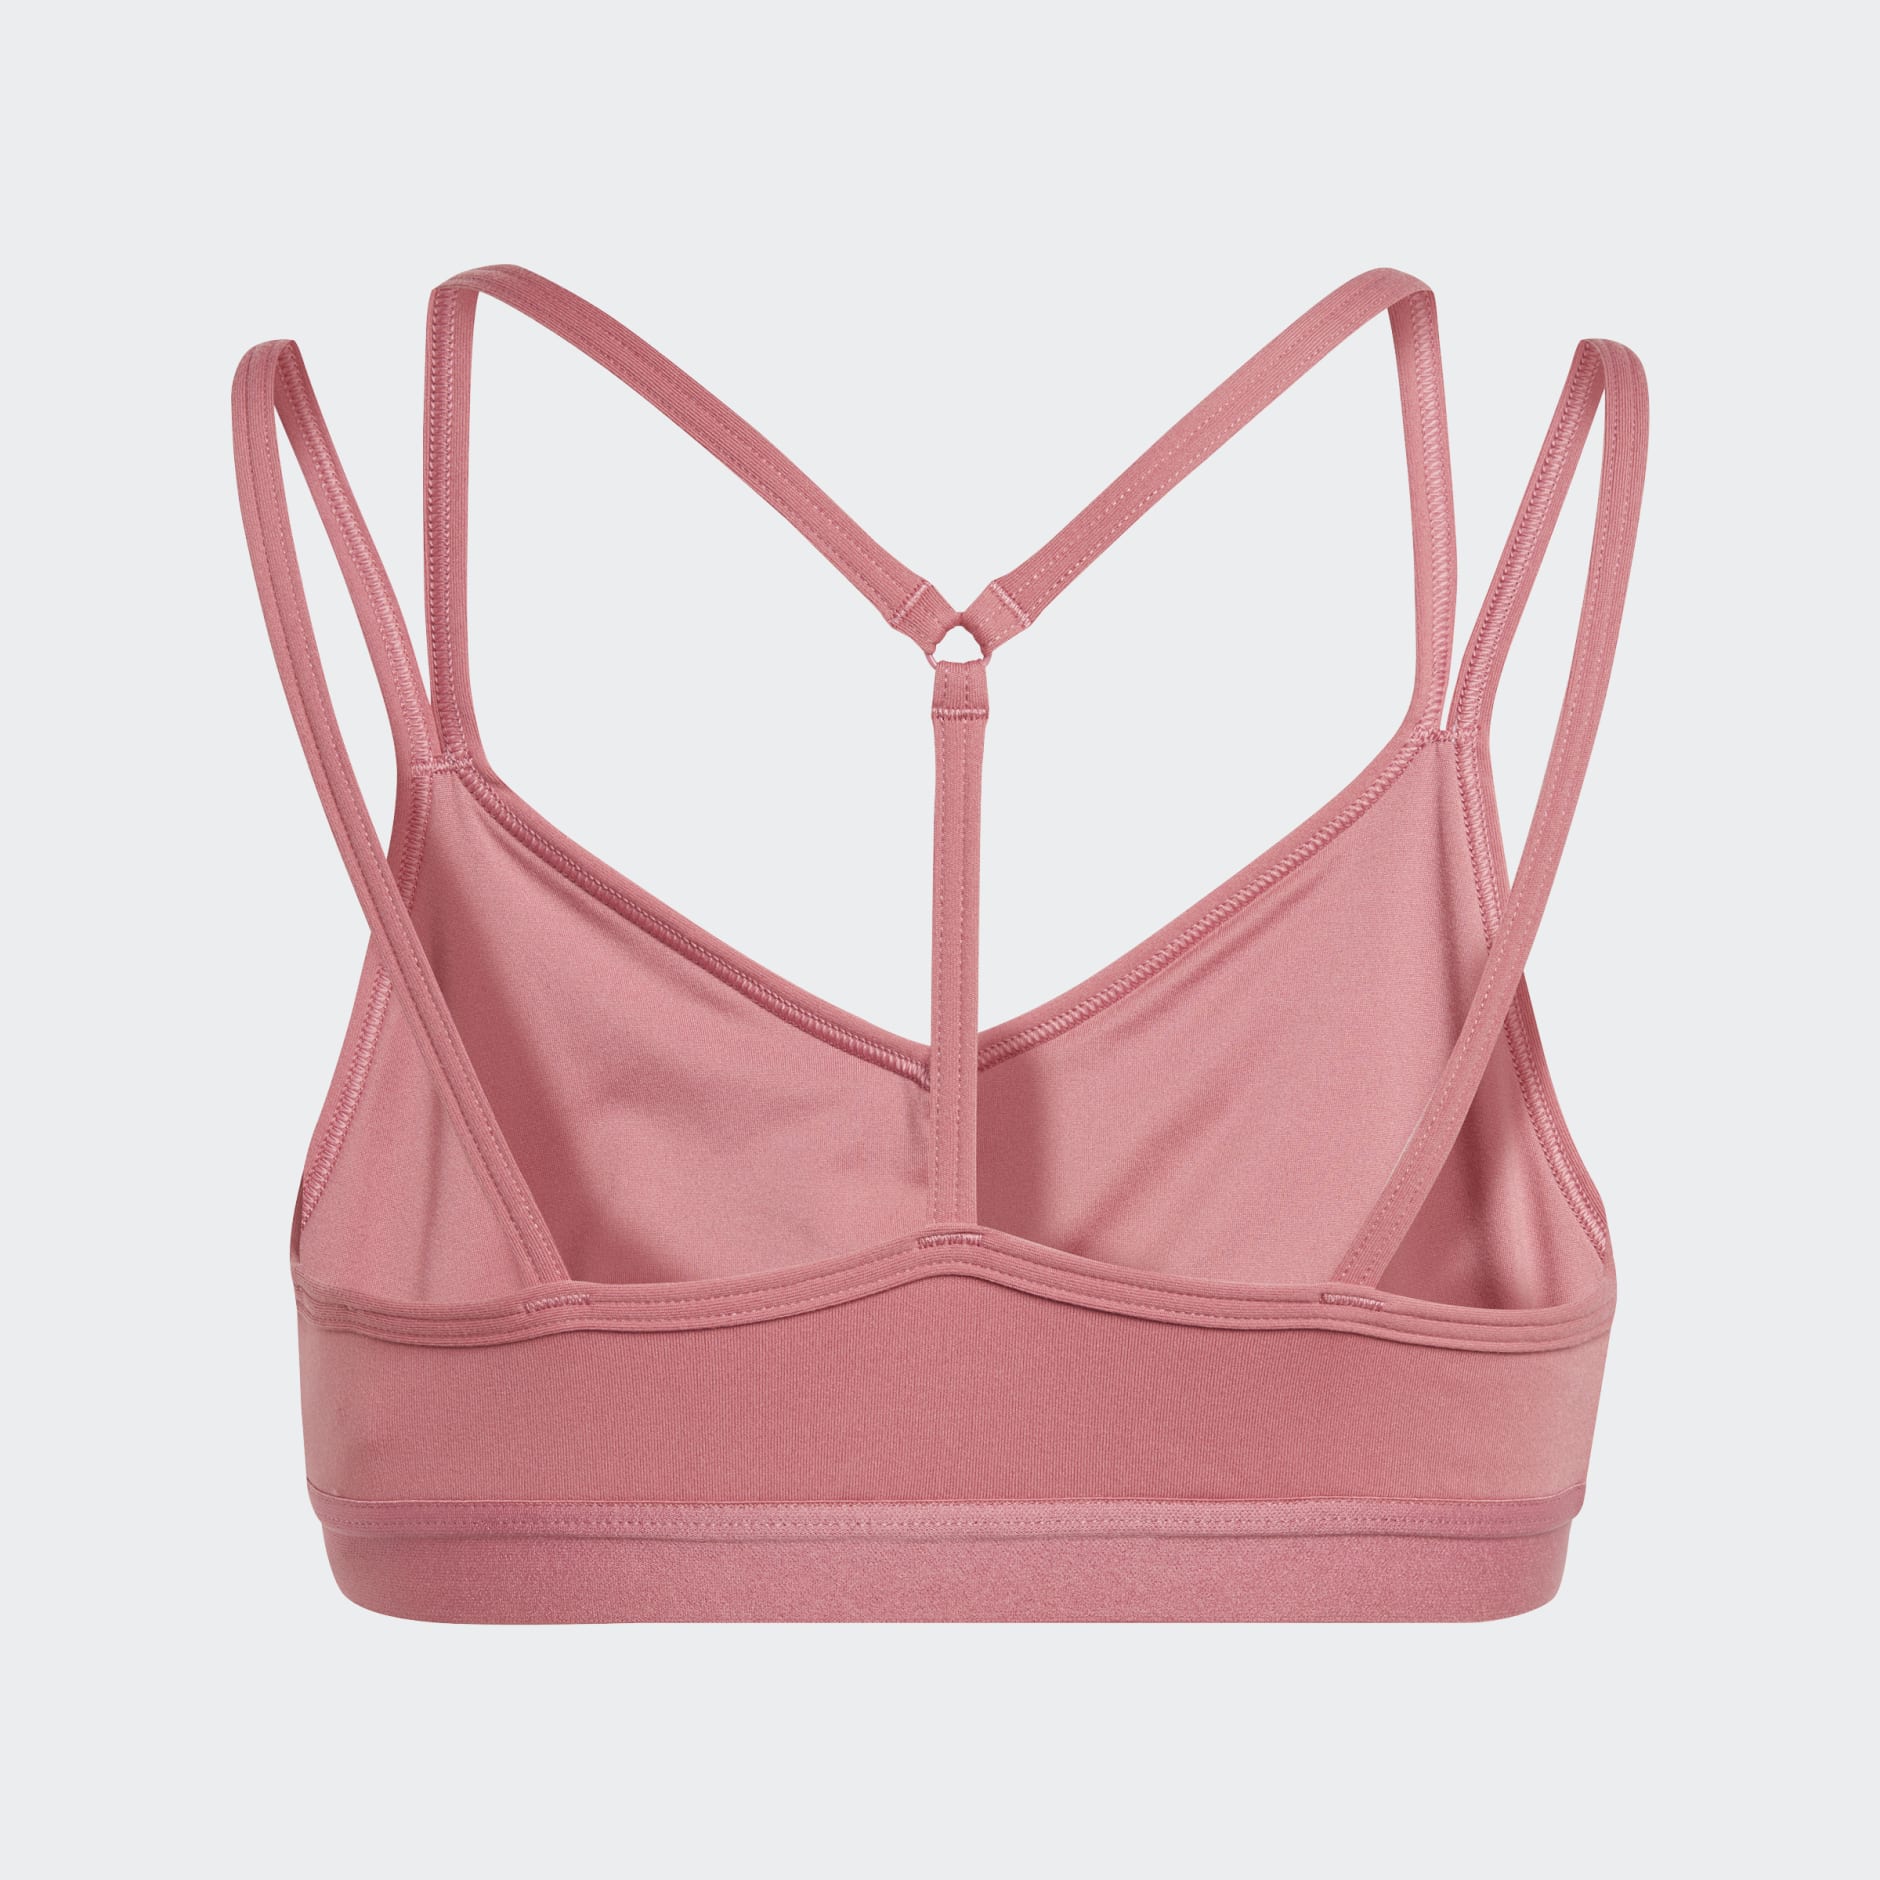 Clothing - AEROREADY Yoga Sports Bra - Pink